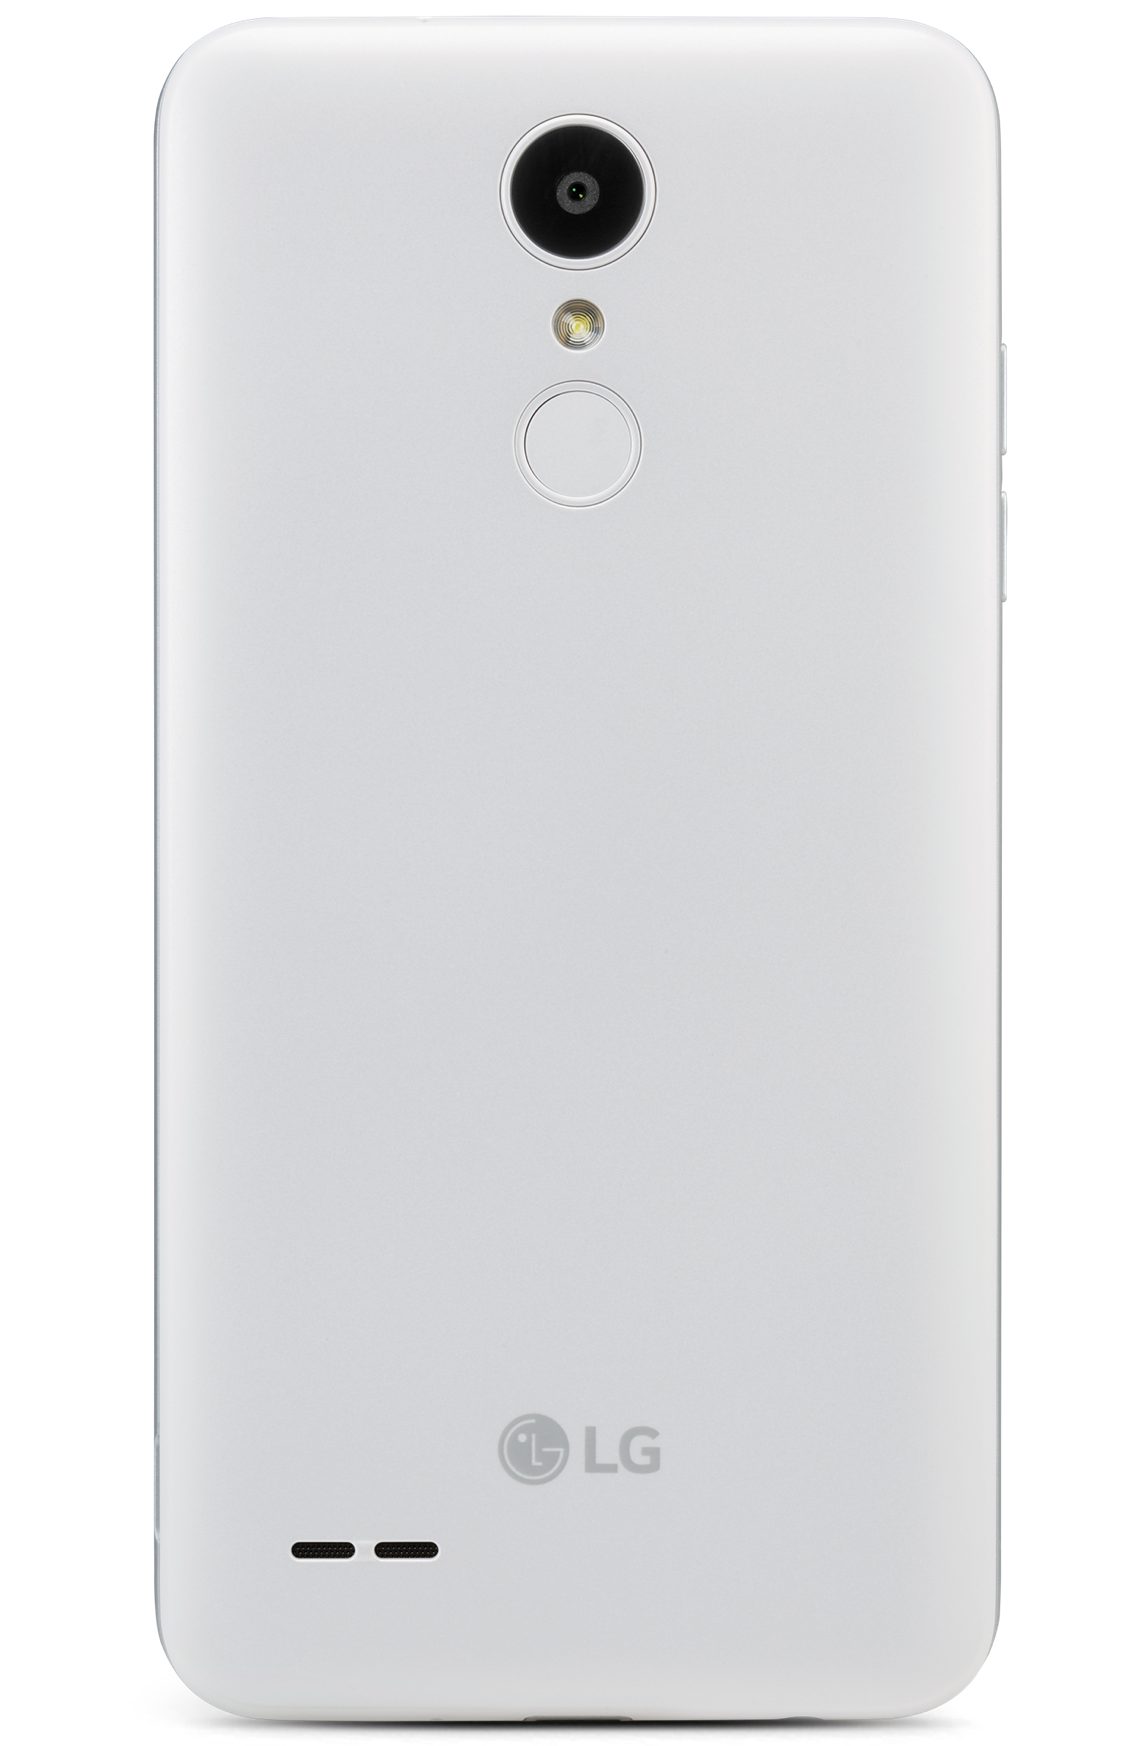 Boost Mobile LG Tribute Empire 16GB Prepaid Smartphone, Silver - image 5 of 5